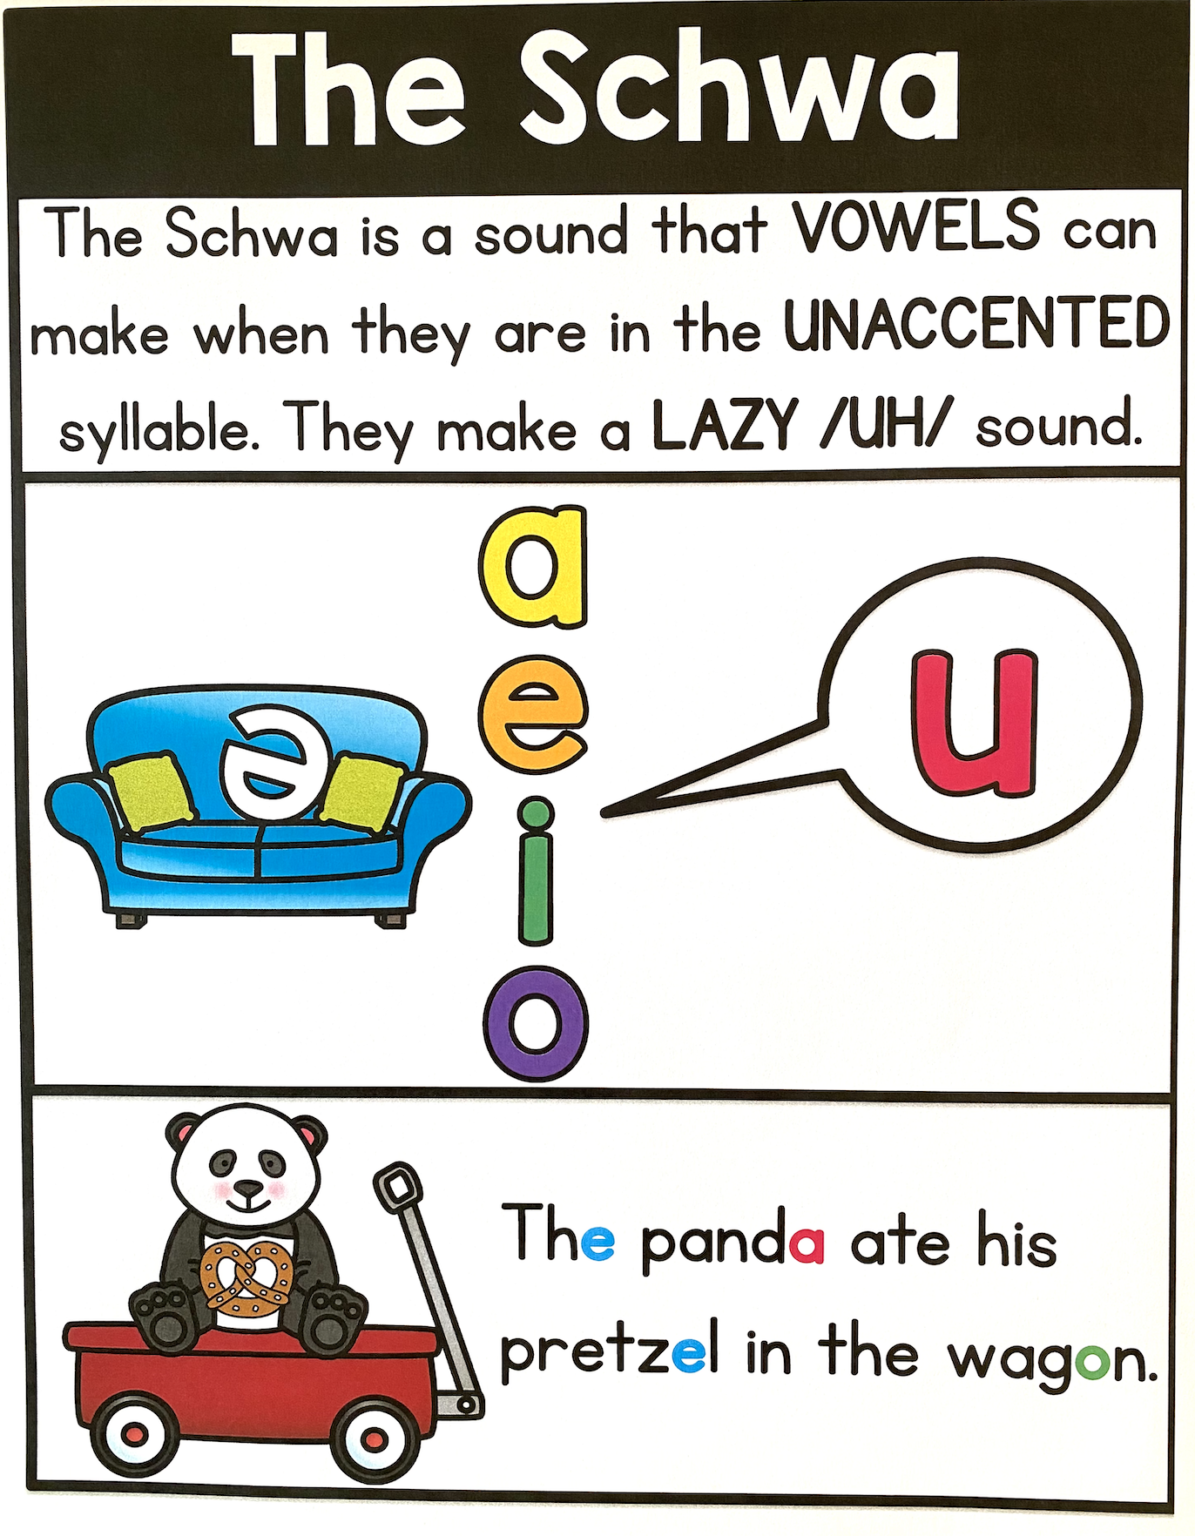 schwa-worksheets-and-activities-making-english-fun